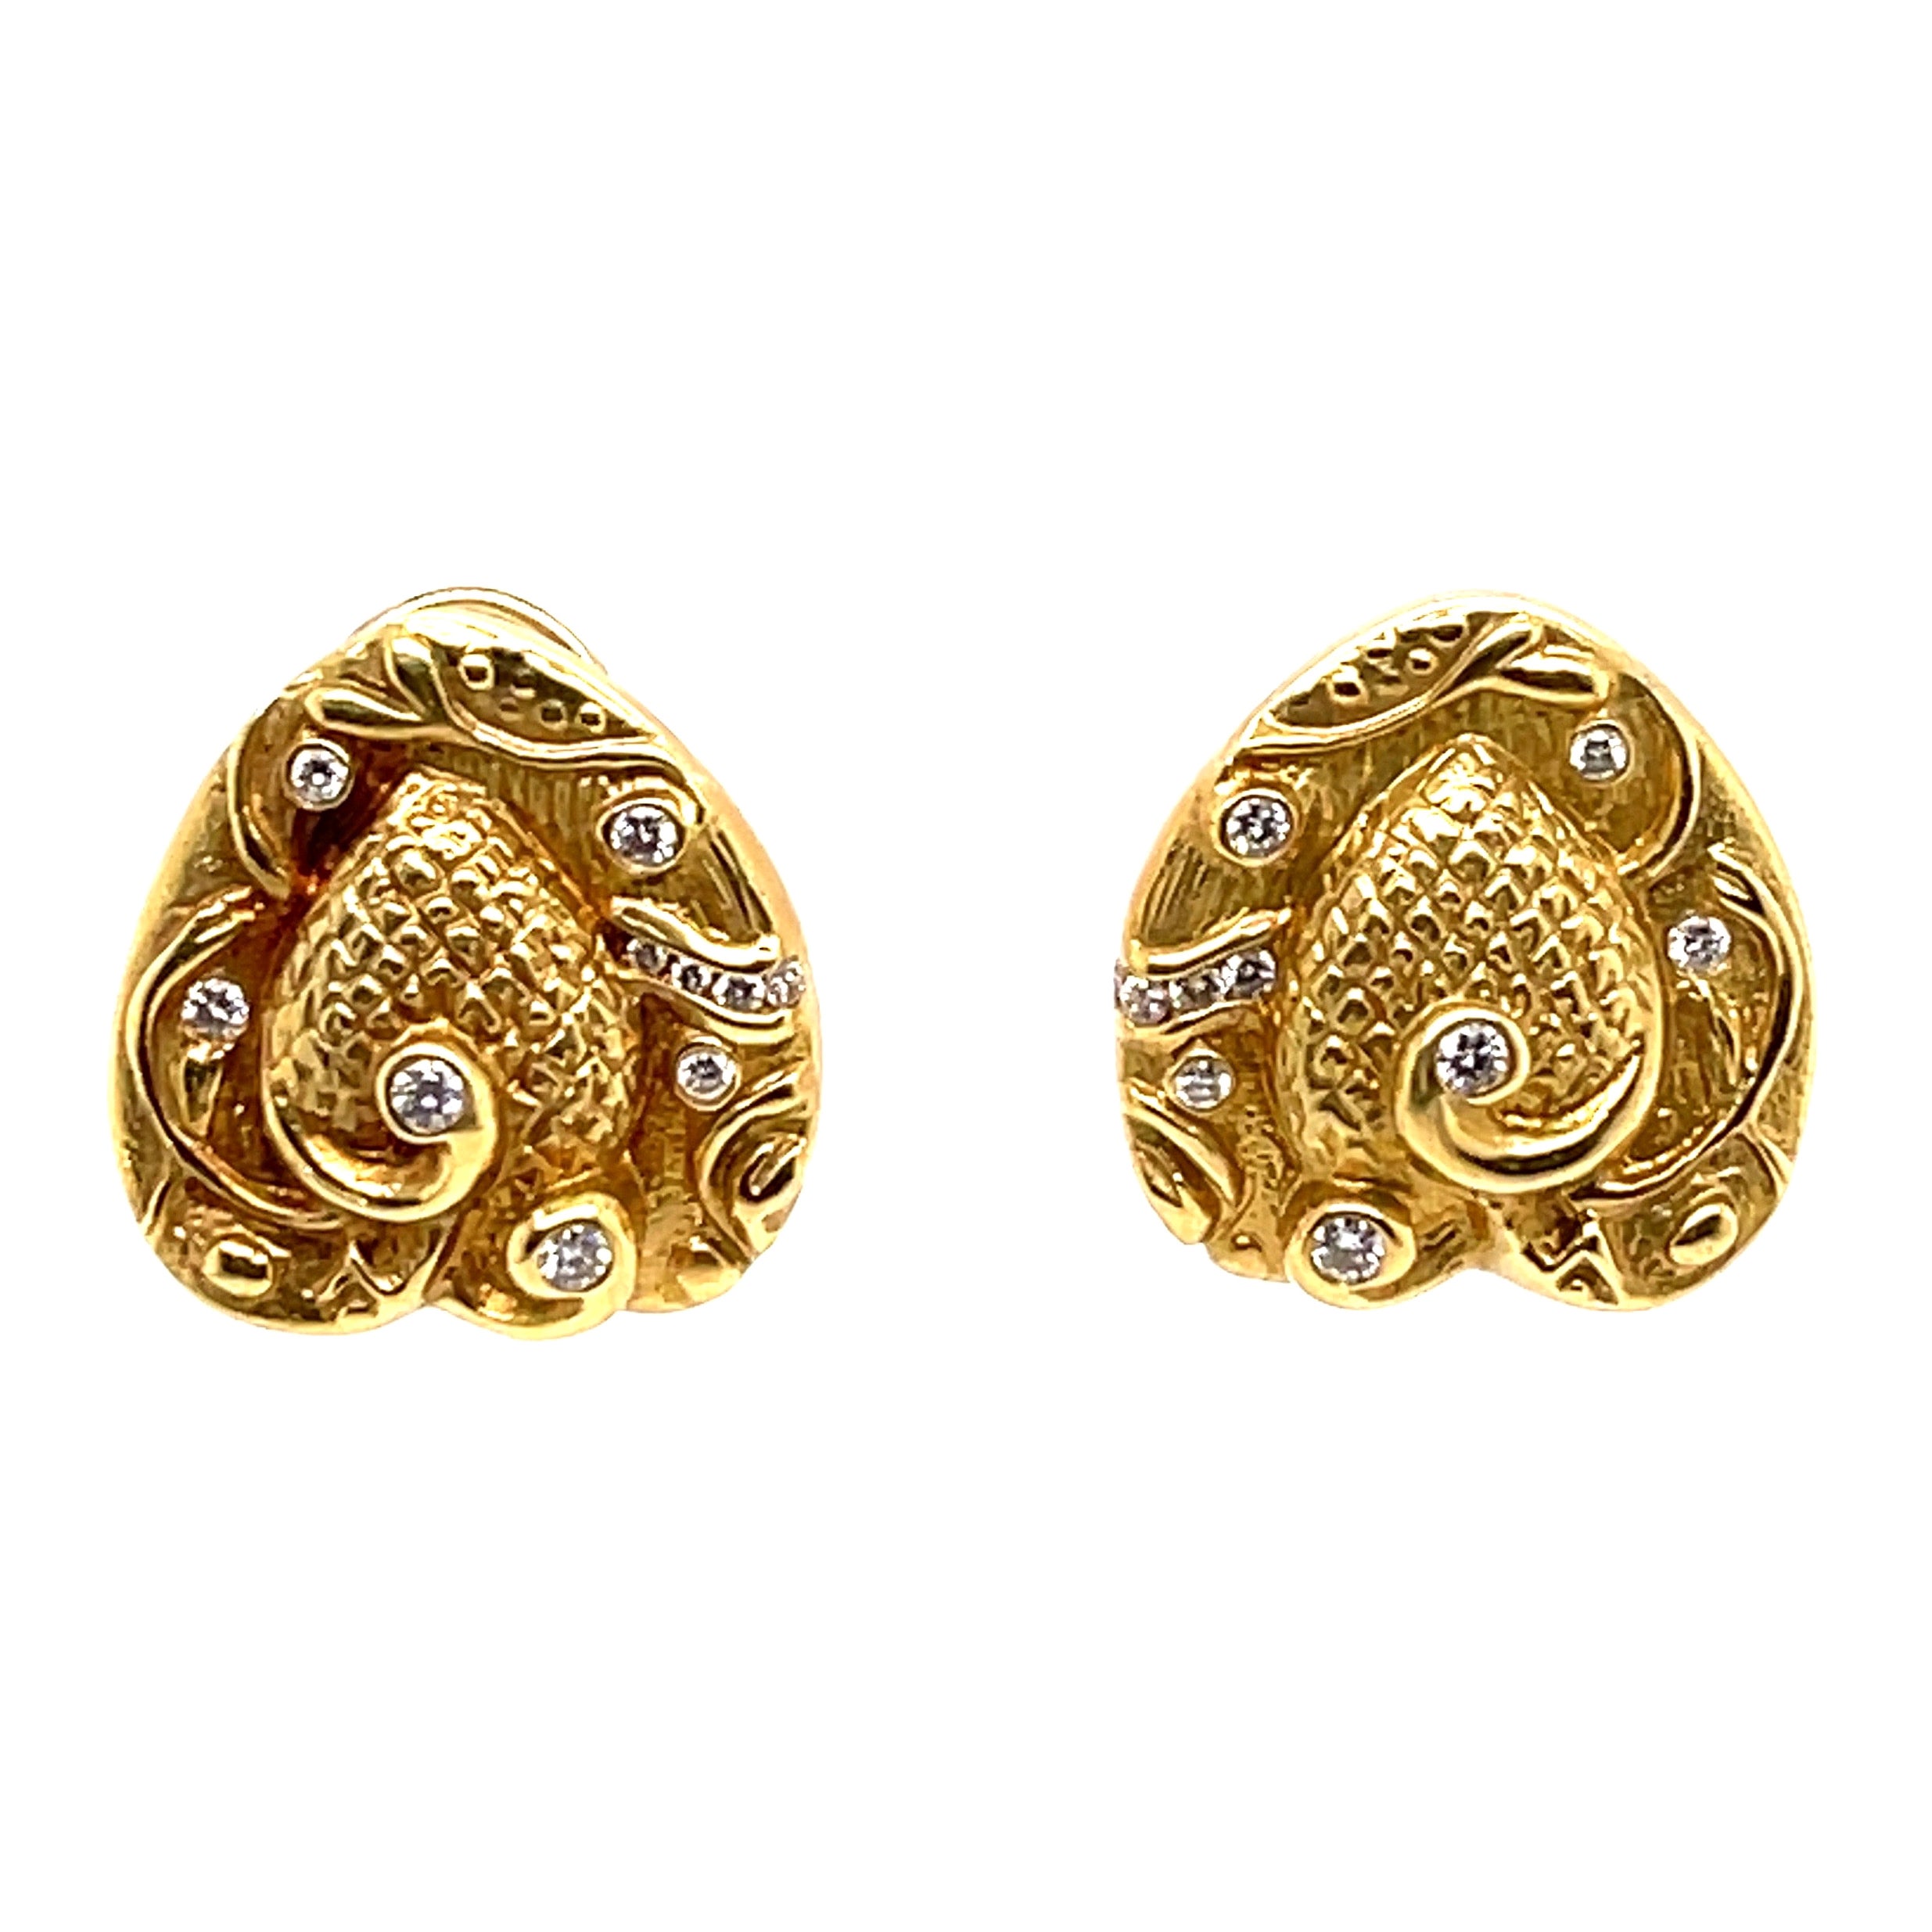 Heart Shaped Vintage Diamond Gold Earrings